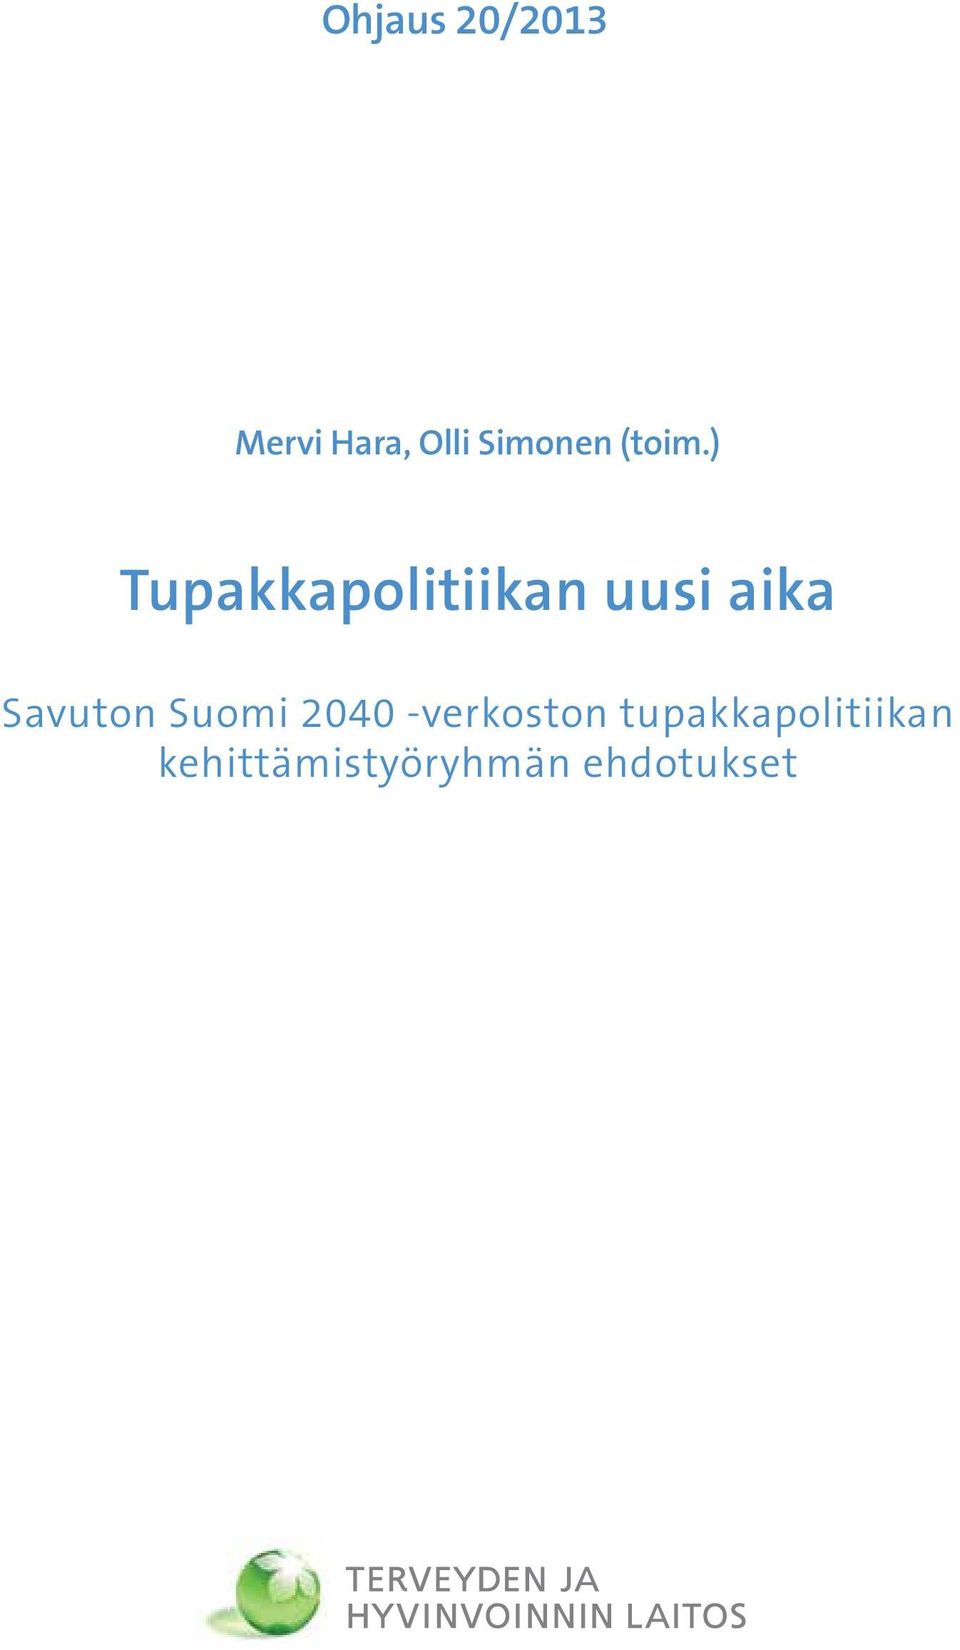 ) Savuton Suomi 2040 -verkoston